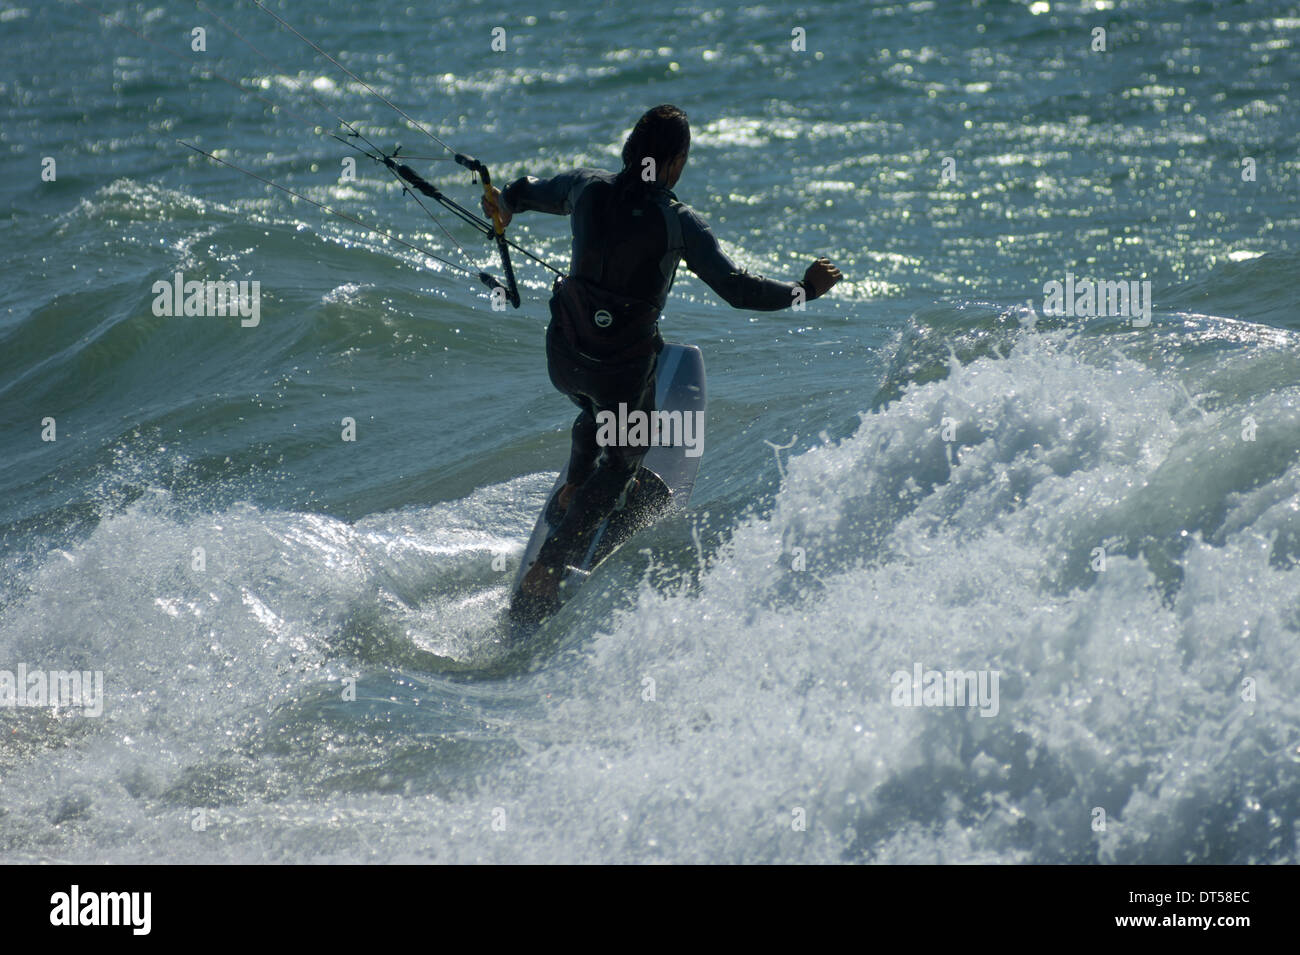 A kitesurfer enjoying the waves and fresh wind at Tarifa, Spain Stock Photo